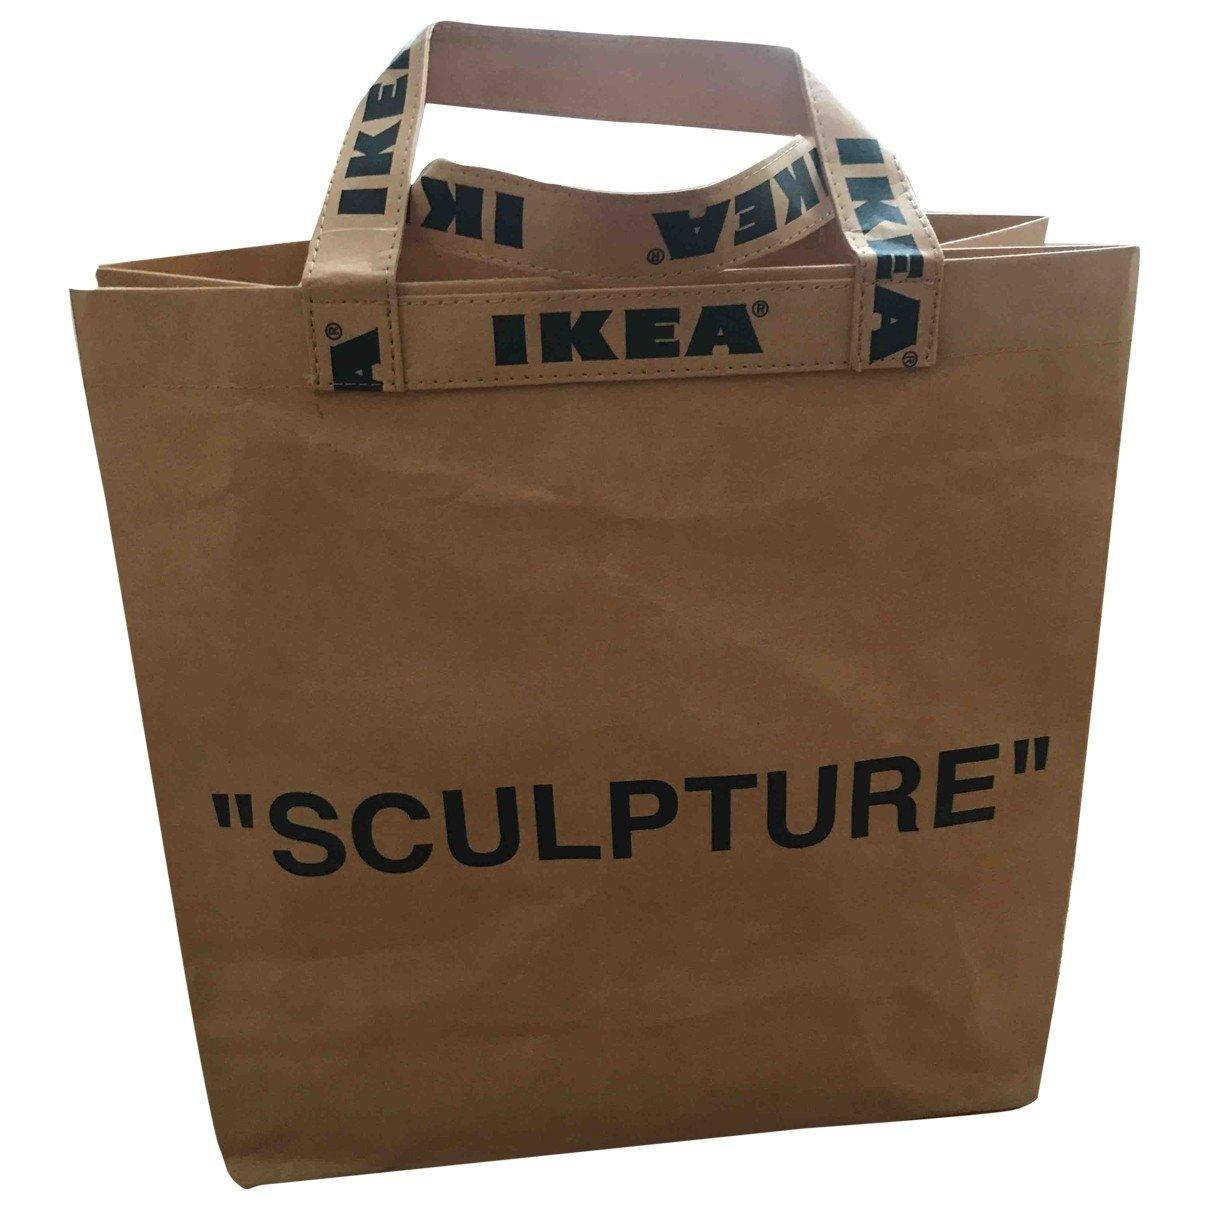 "Sculpture" Shopping Bag - Mixed Media Art by Virgil Abloh